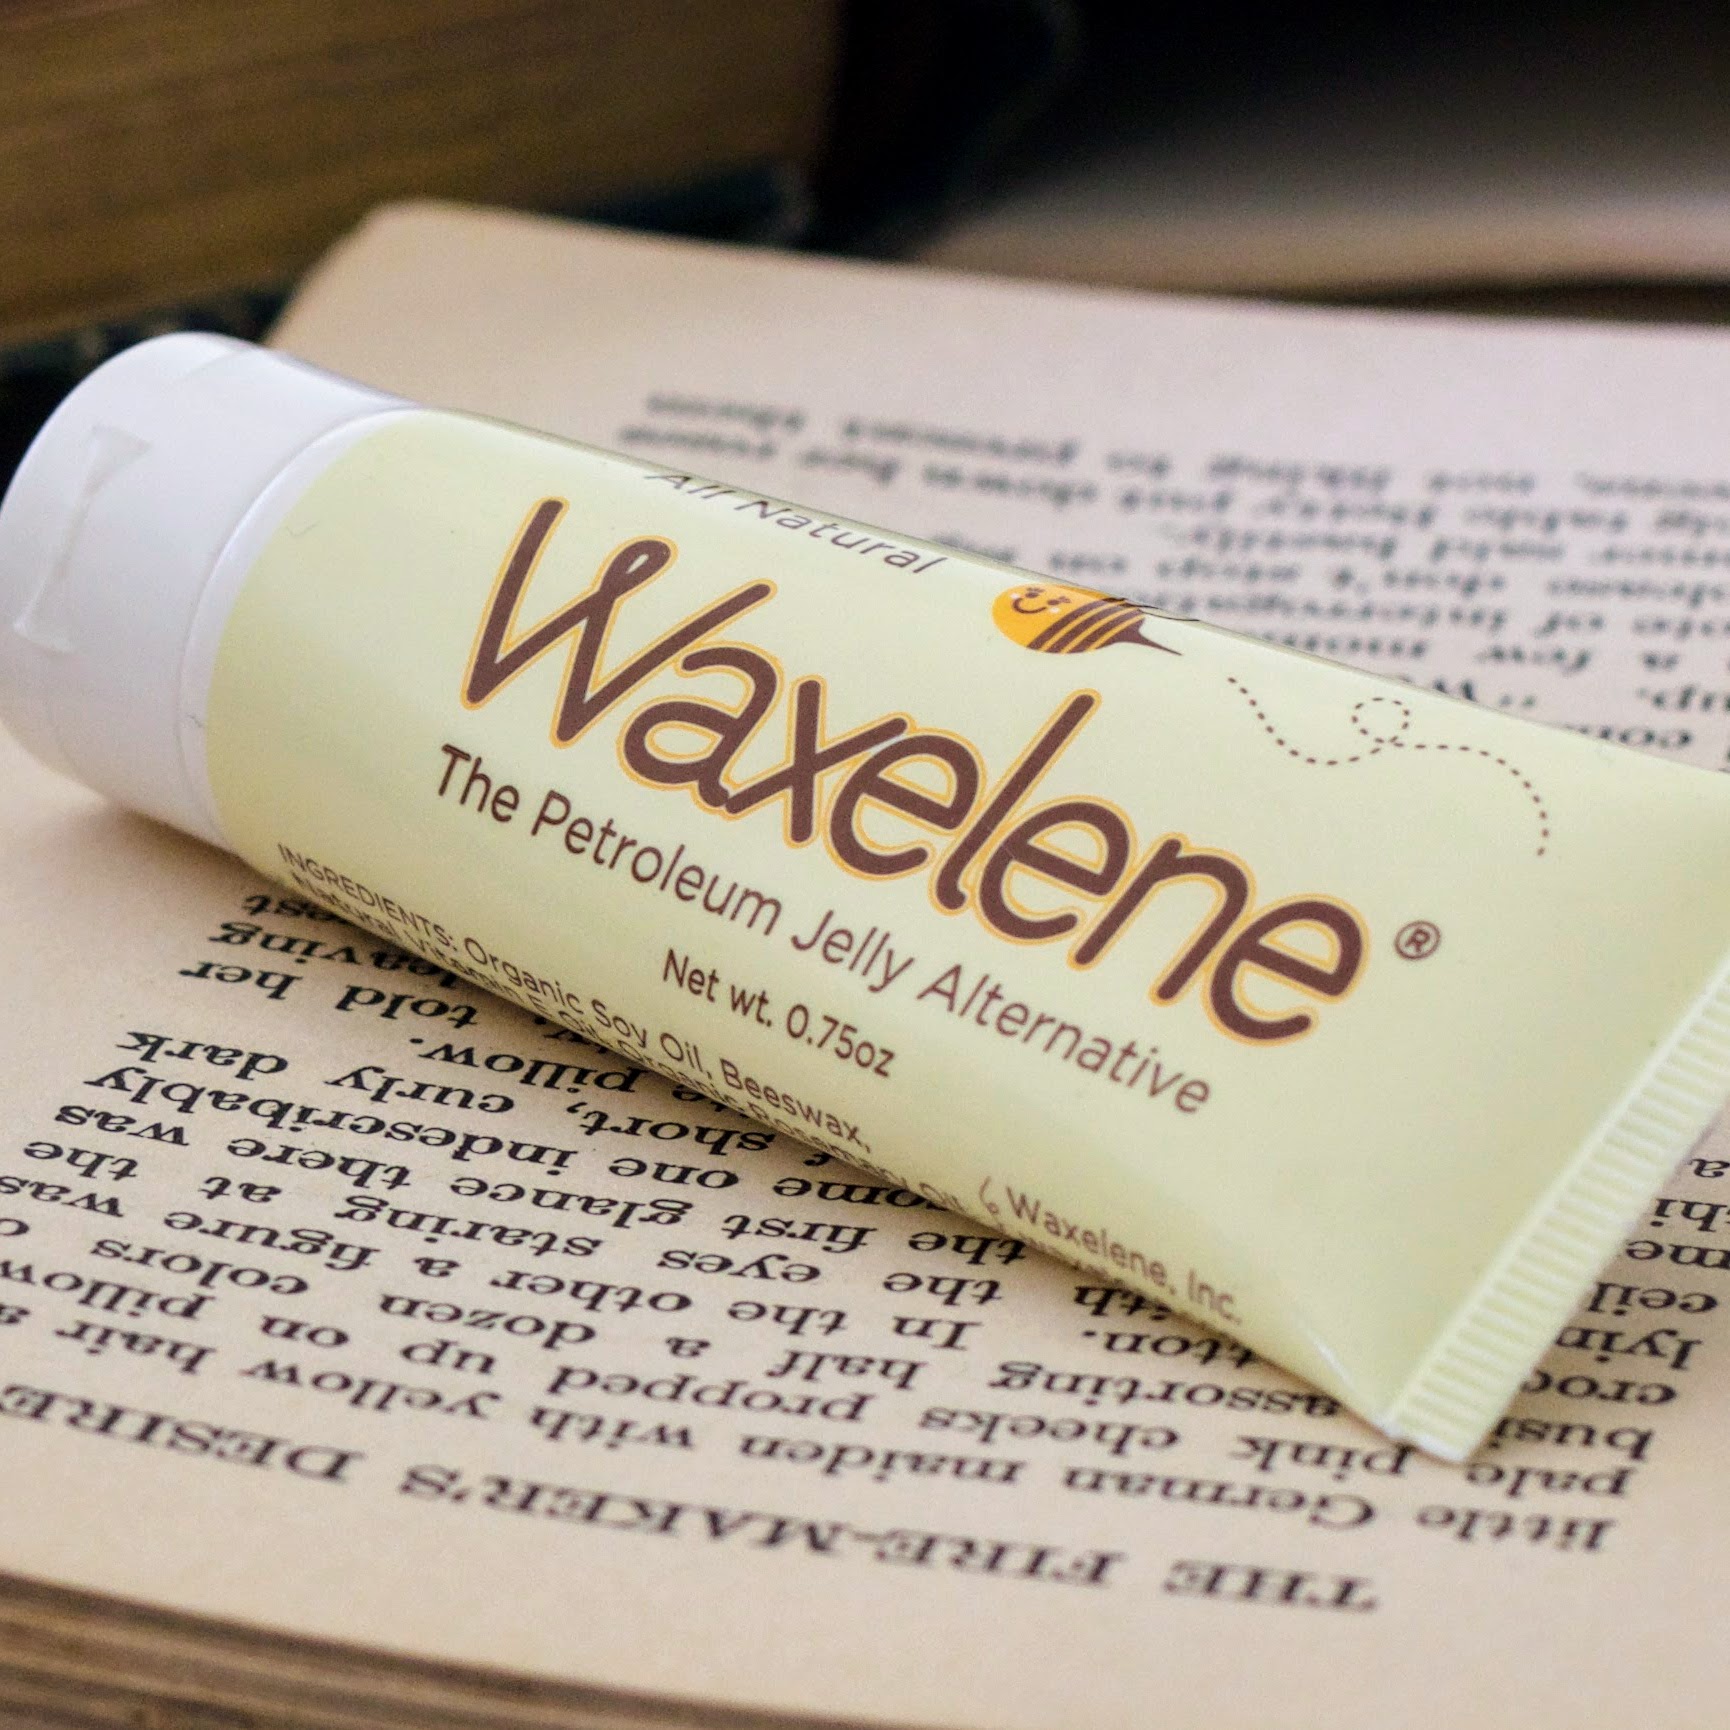 Waxelene Natural Petroleum Jelly Alternative – The Beauty Proof